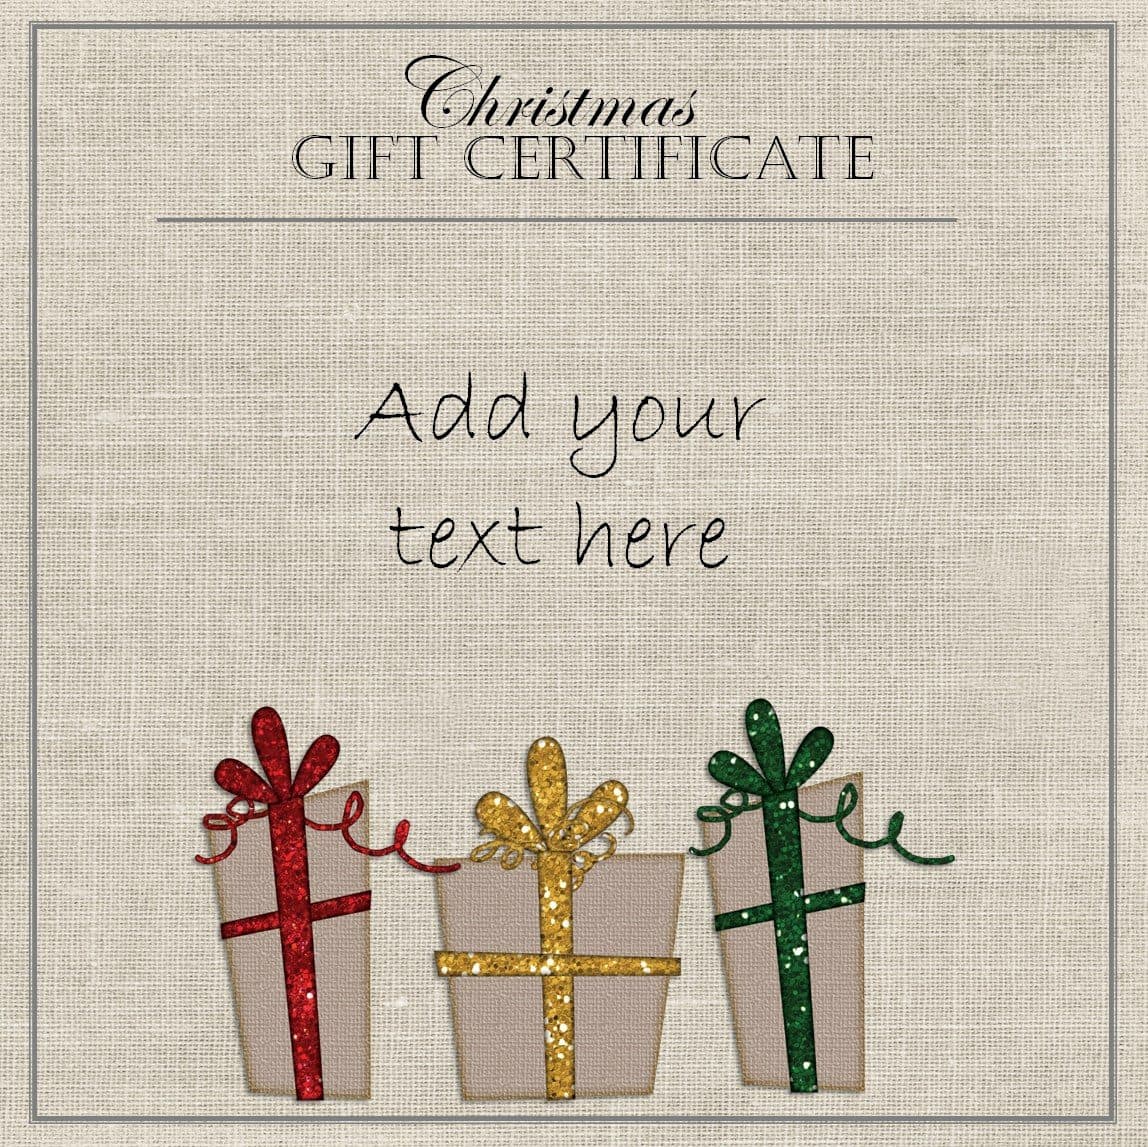 christmas certificates templates free